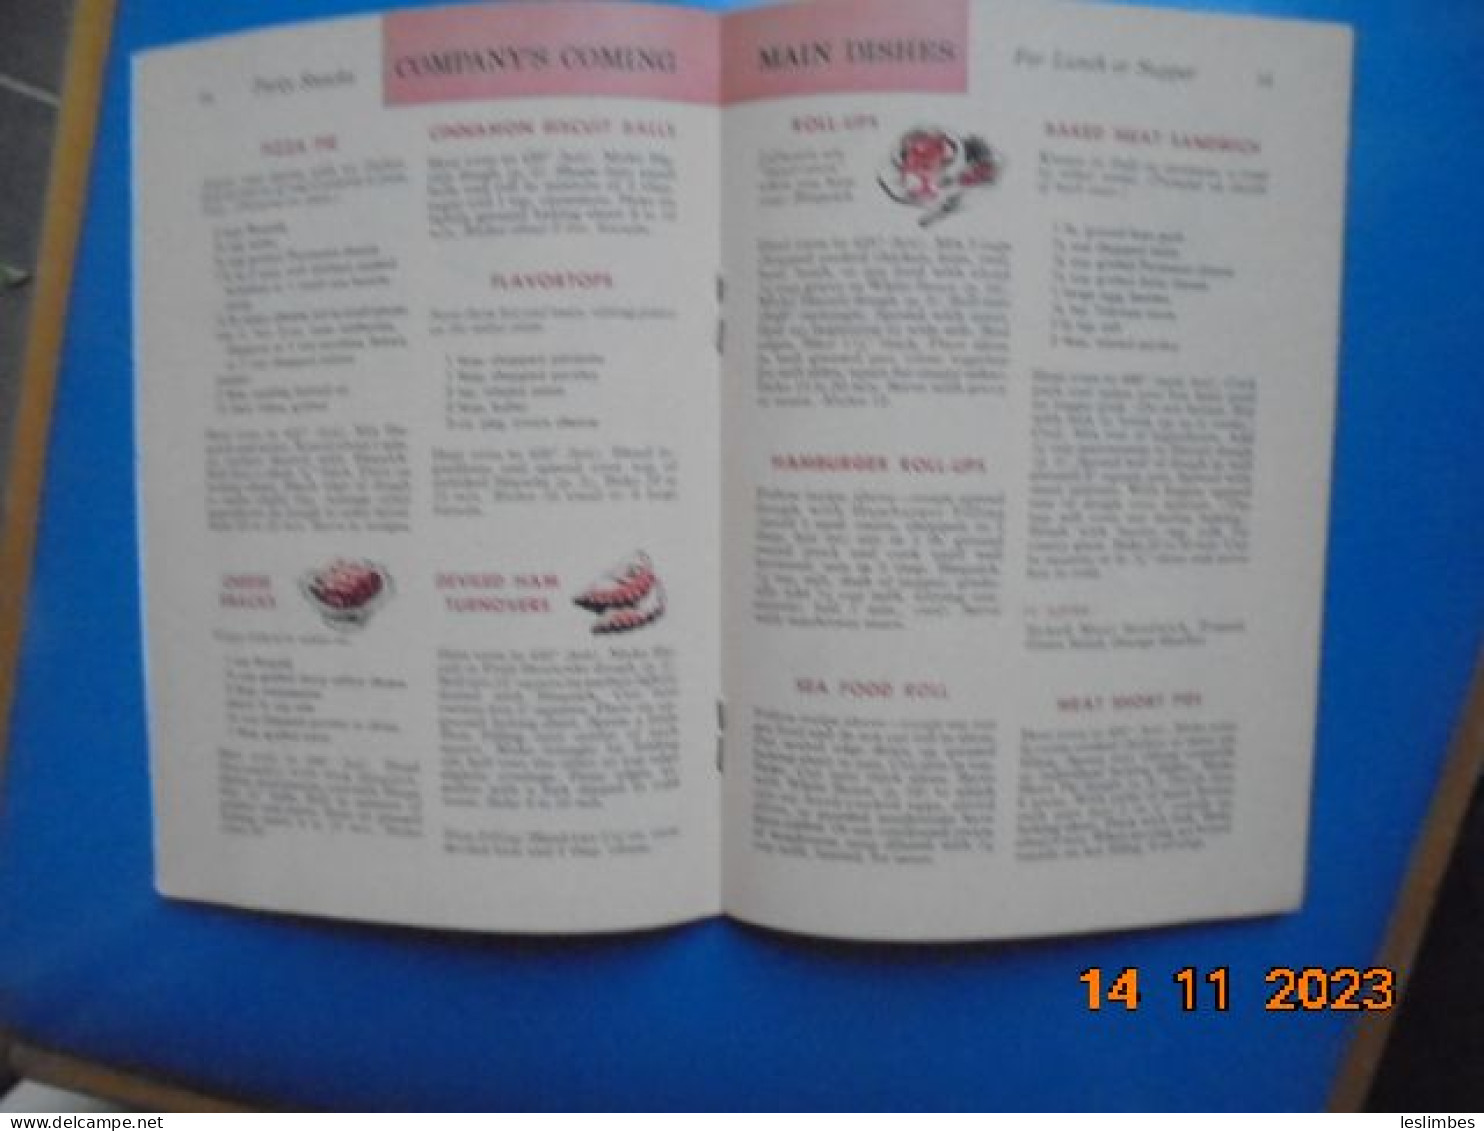 Betty Crocker's Bisquick Cook Book: 157 Recipes And Ideas (1956) - Américaine